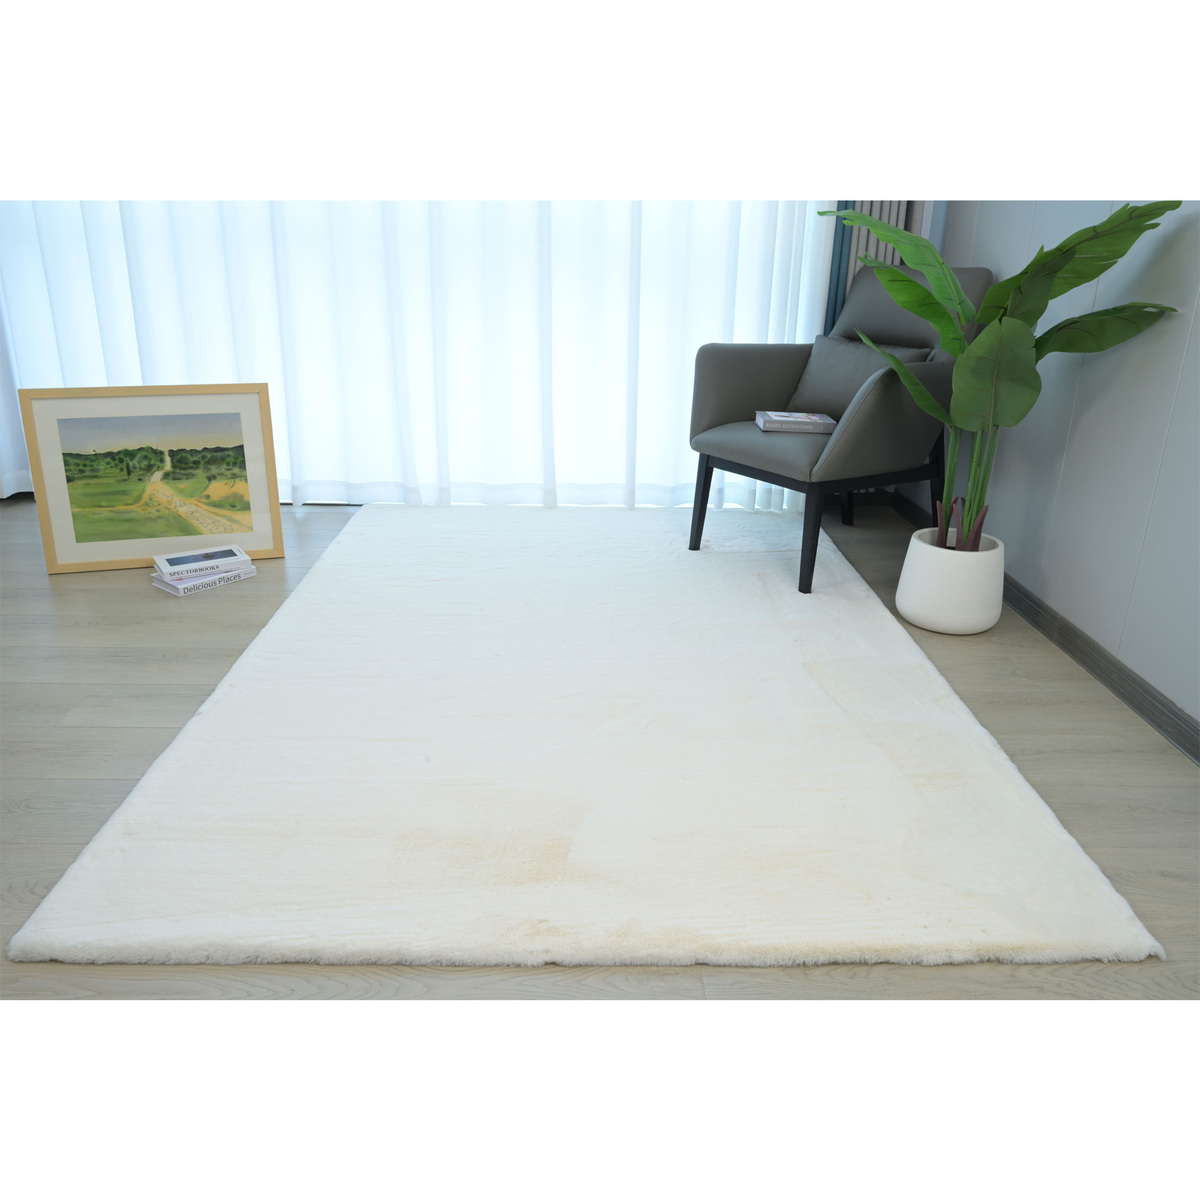 Maple Leaf Ultra Soft Silky Carpet 60x120cm Ivory